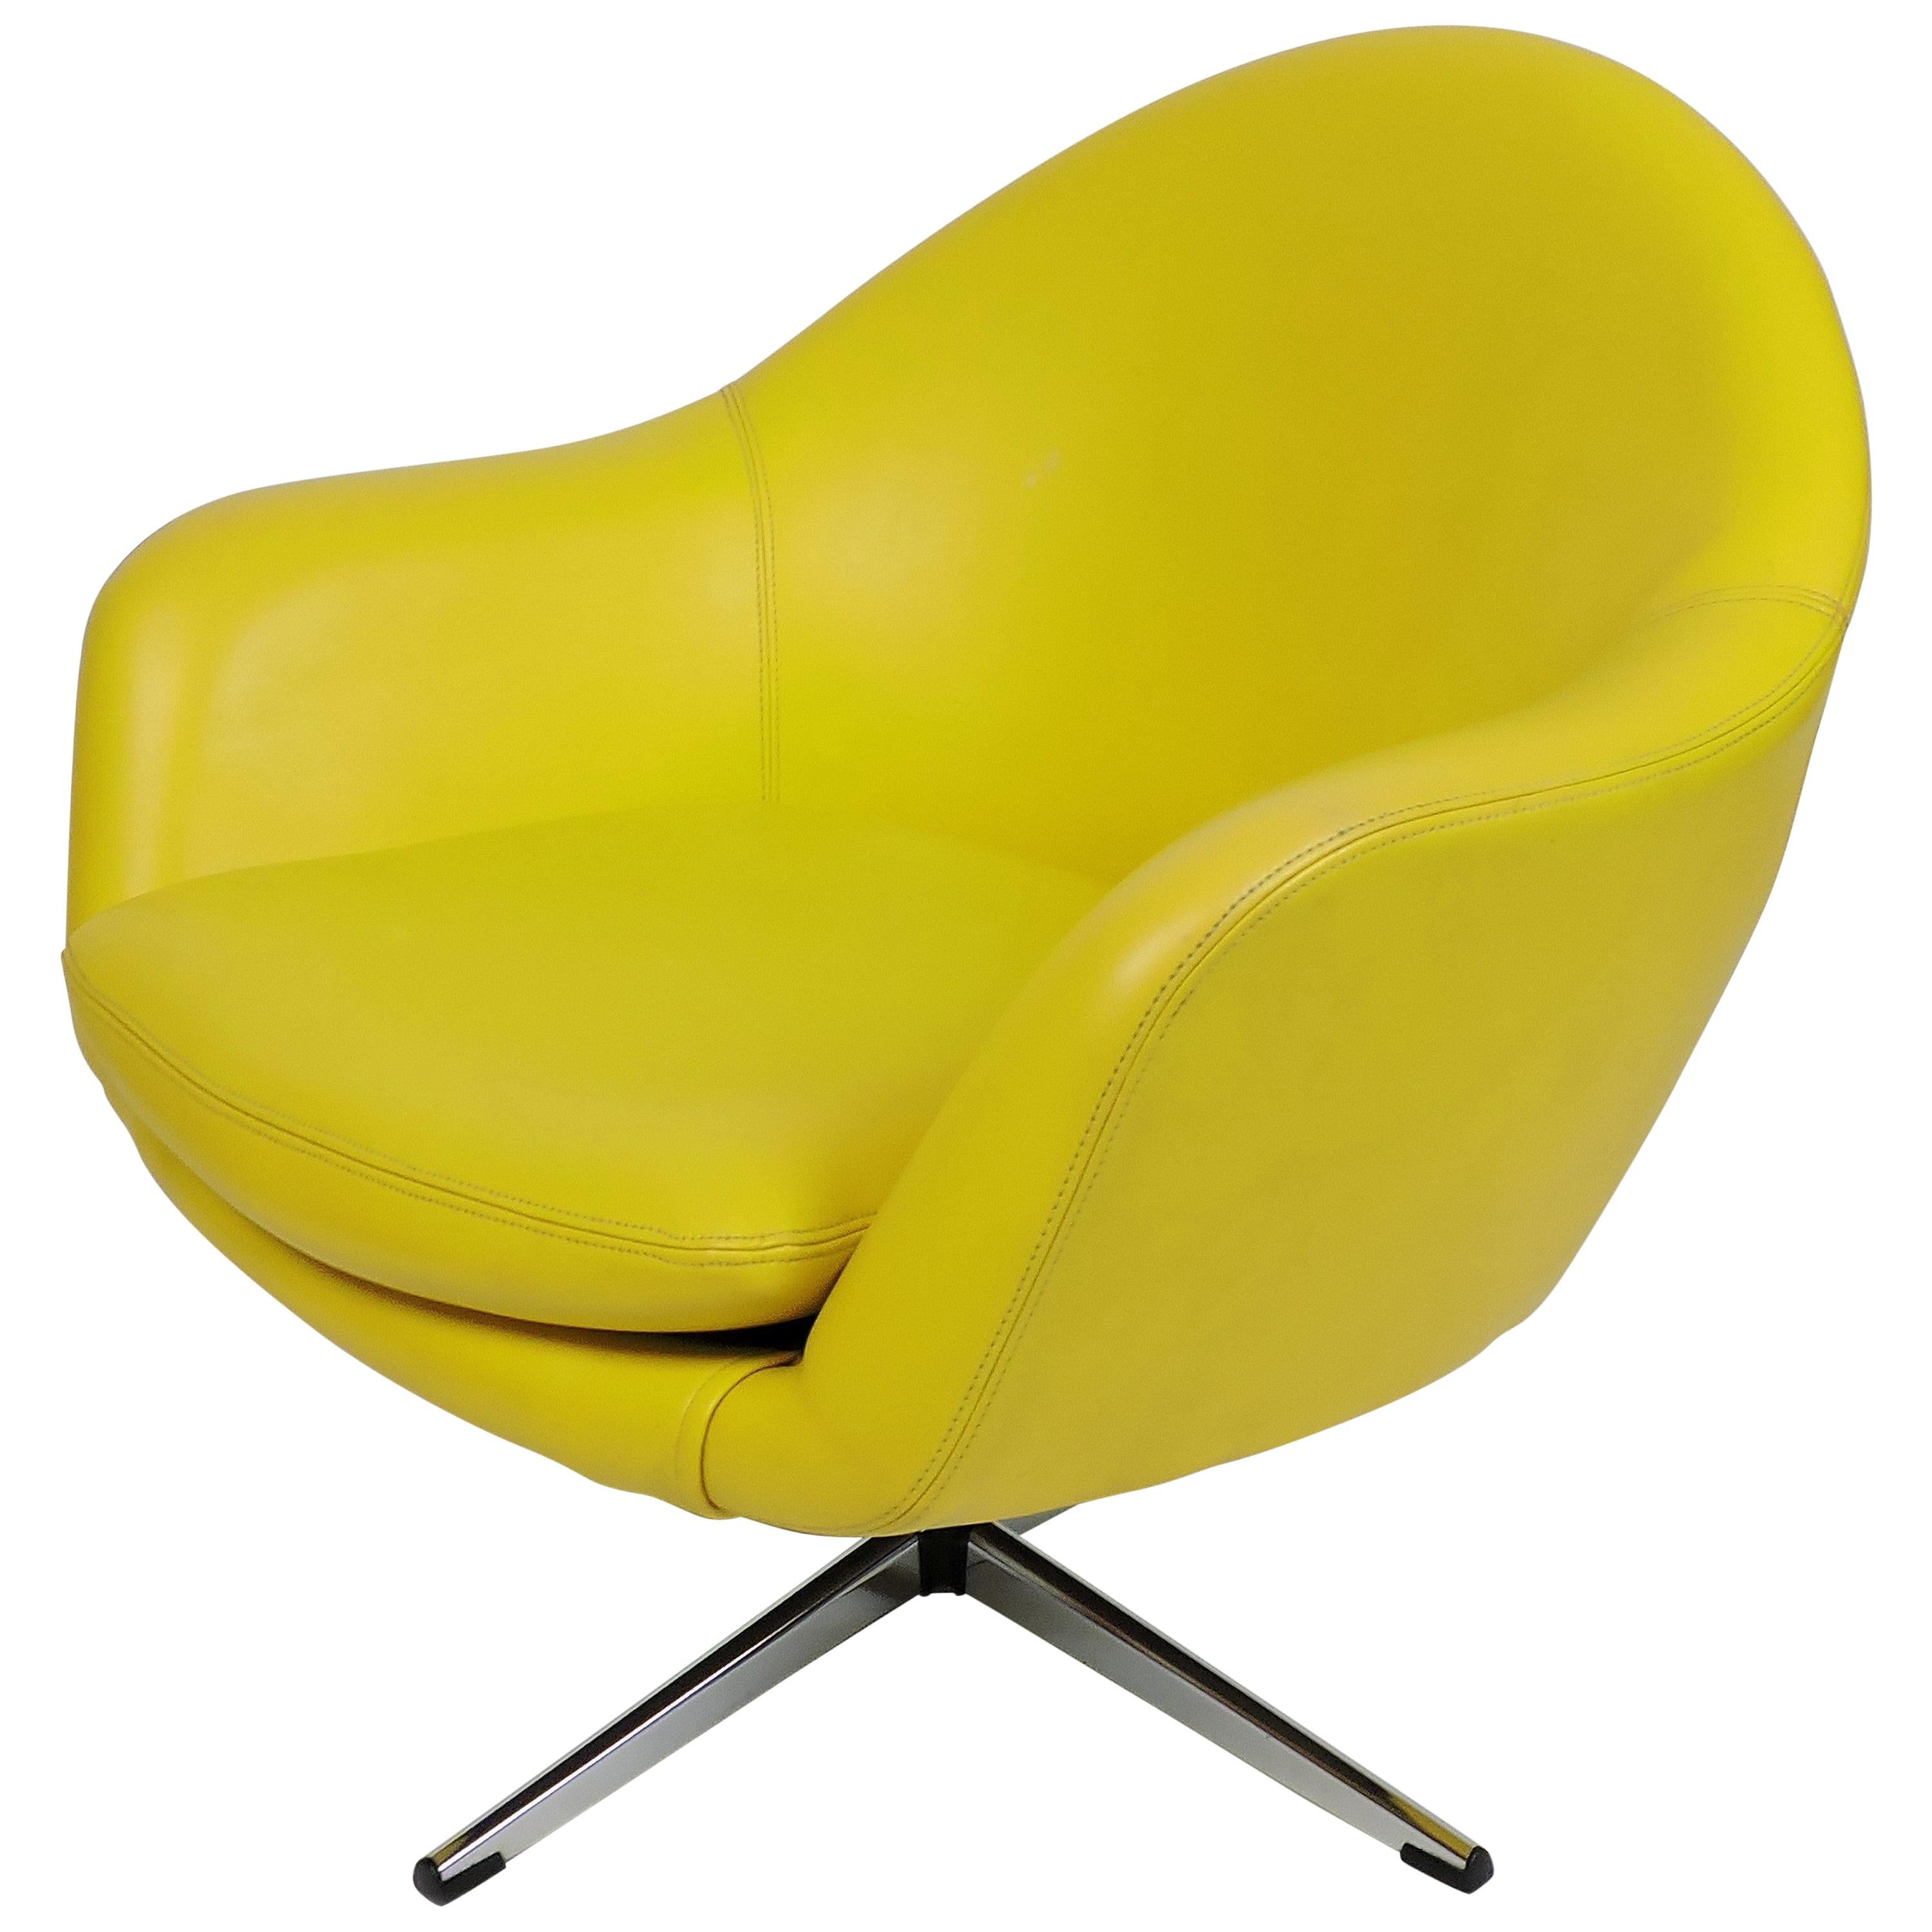 Overman Mid-Century Modern Chrome Swivel Pod Chair in Yellow